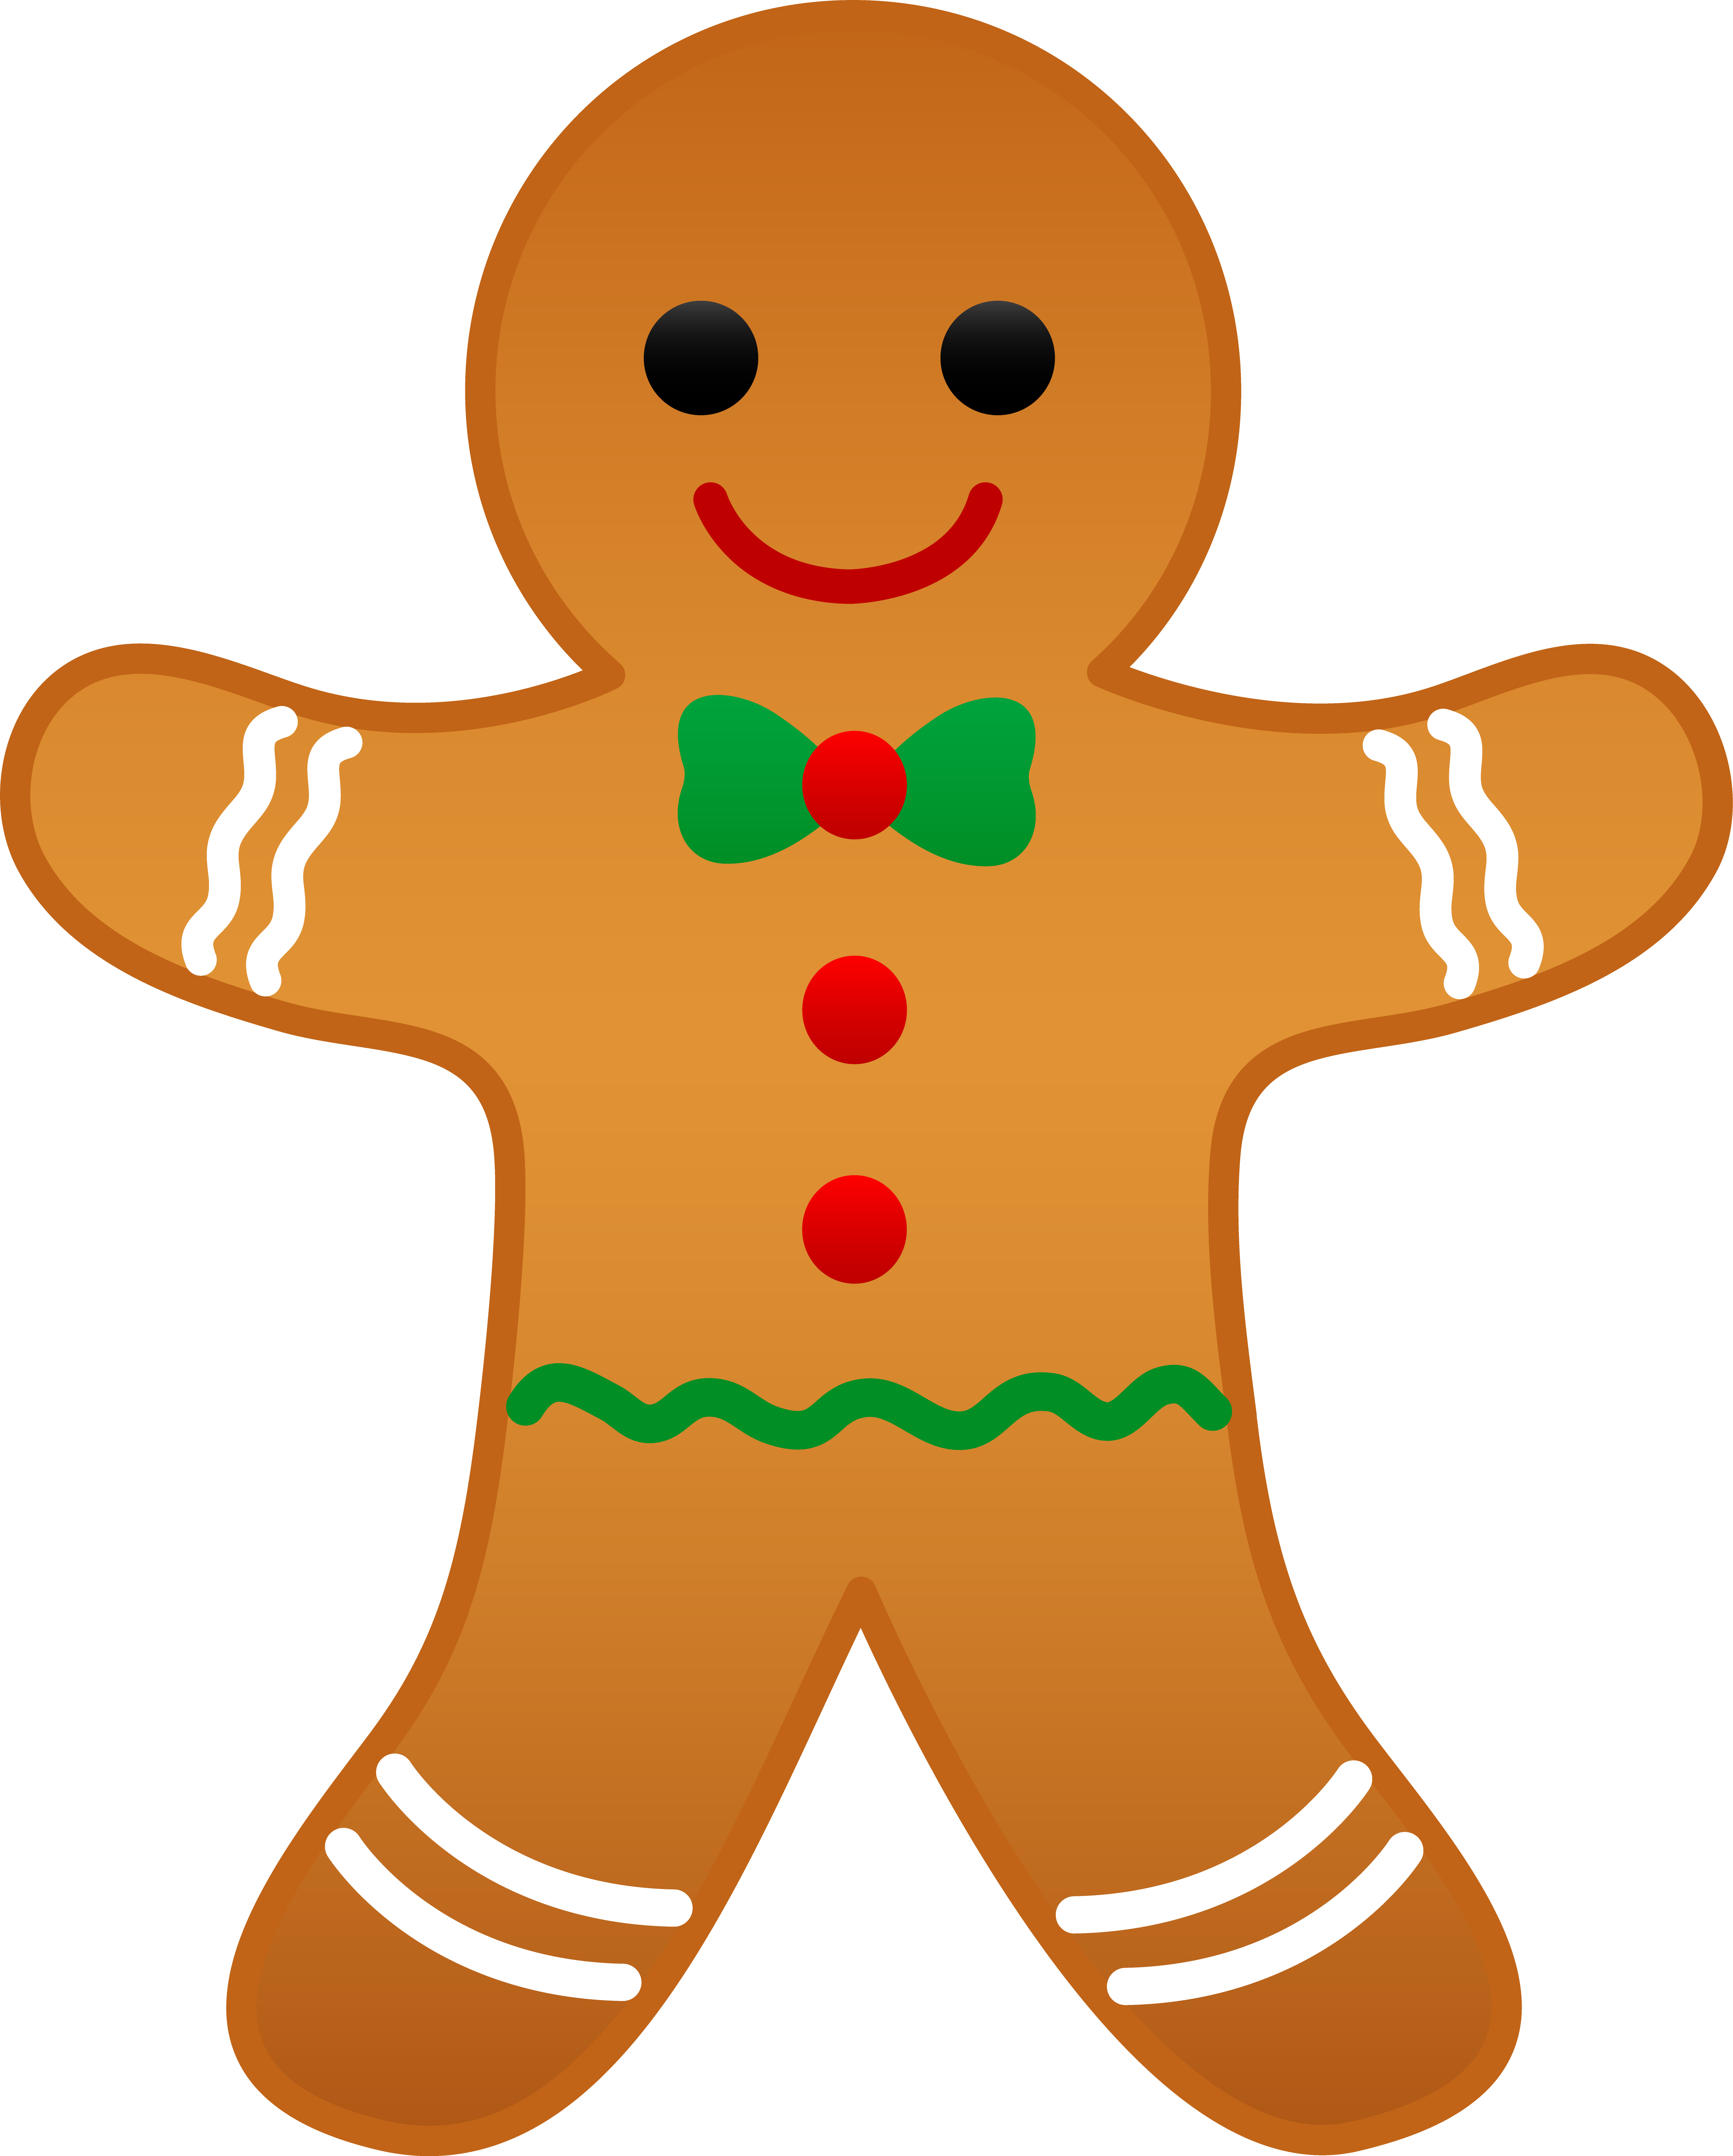 Run Gingerbread Man images